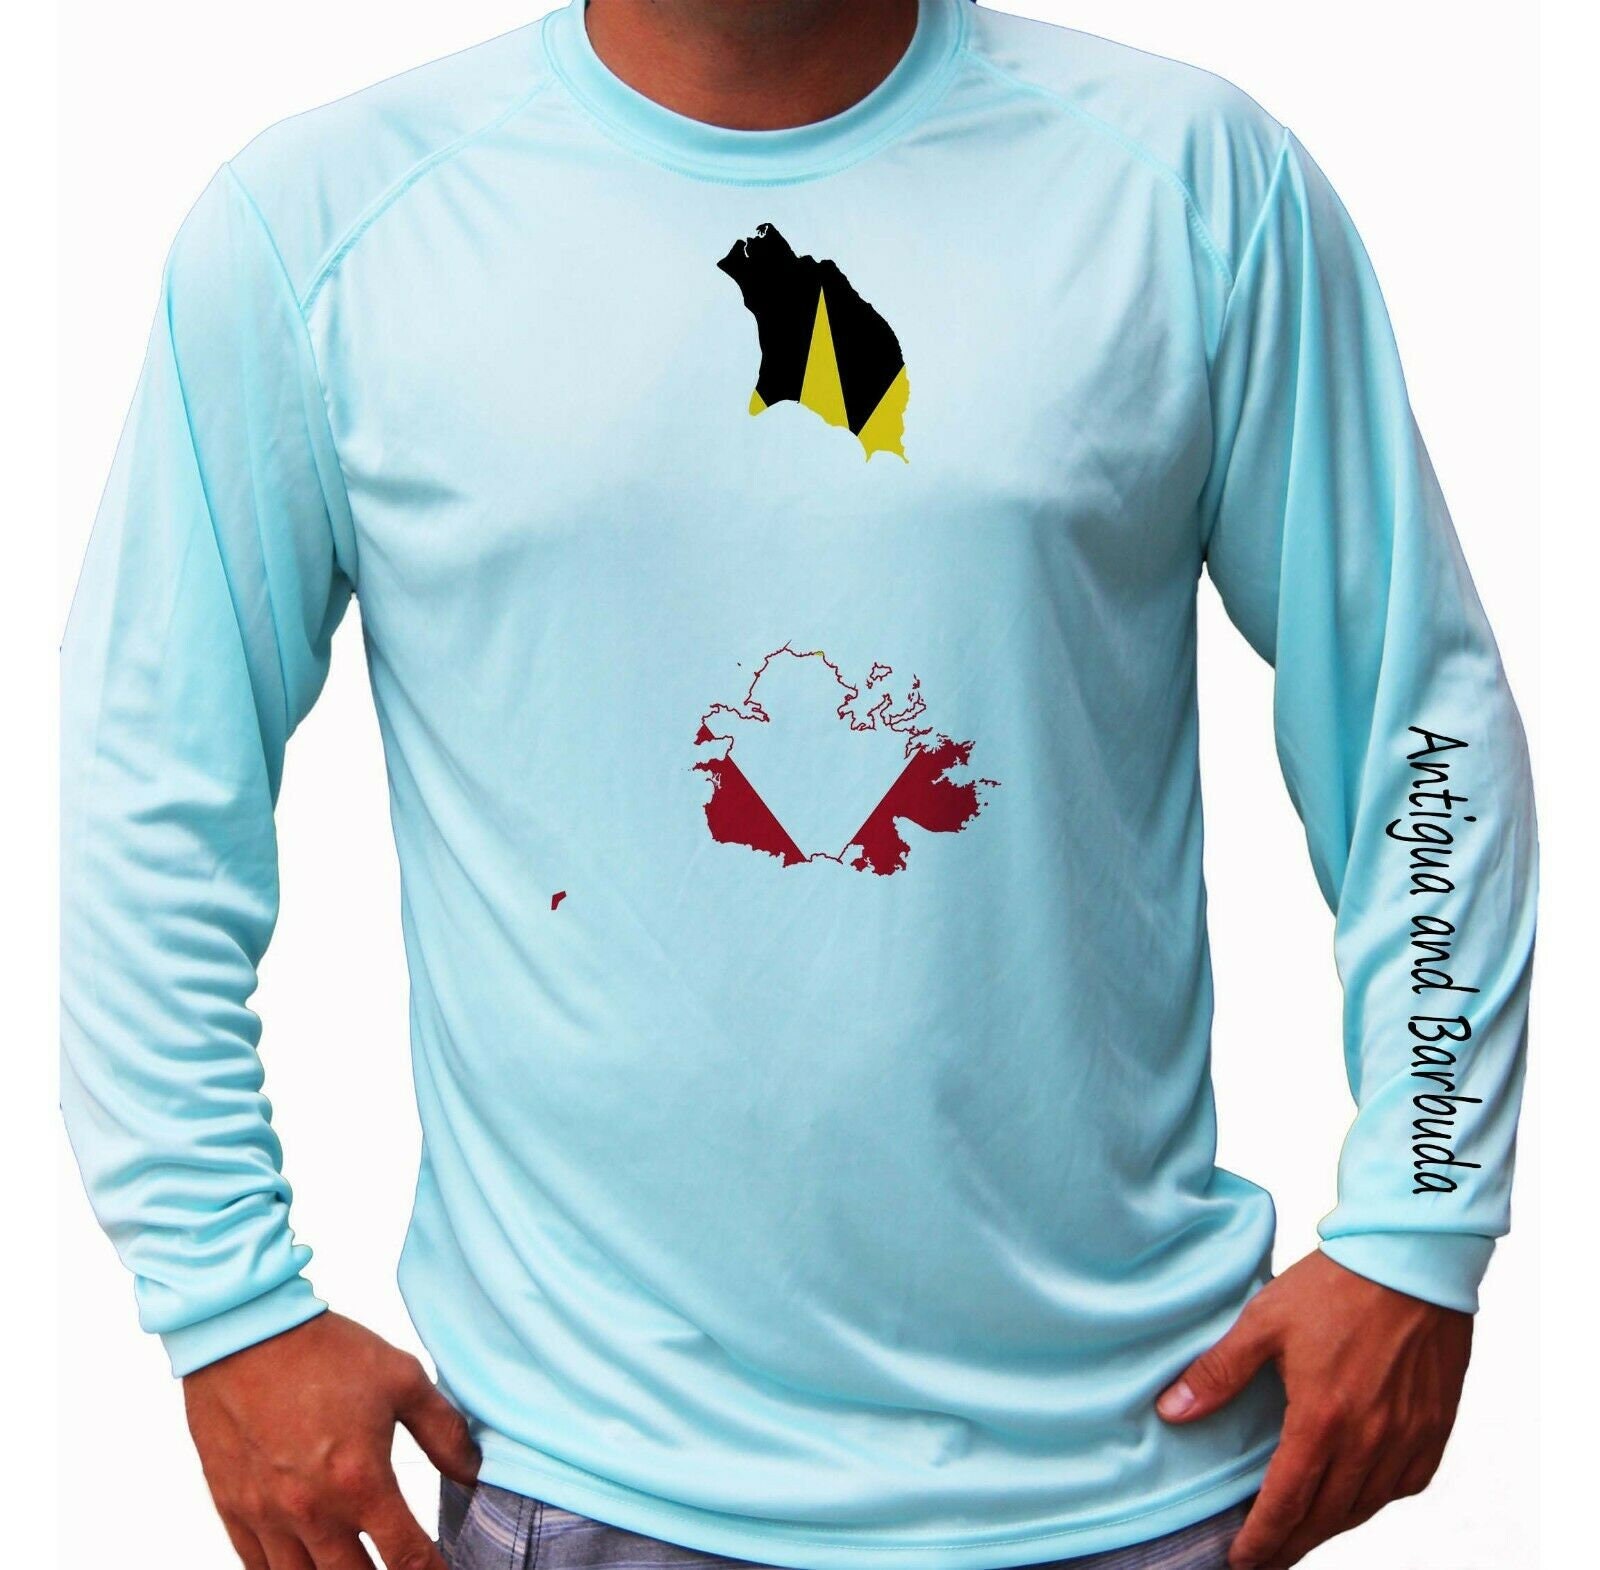 Antigua and Barbuda Flag Map Ocean Fishing Shirt UPF 50 Long Sleeve T-Shirt Sun UV Protection Front or Back